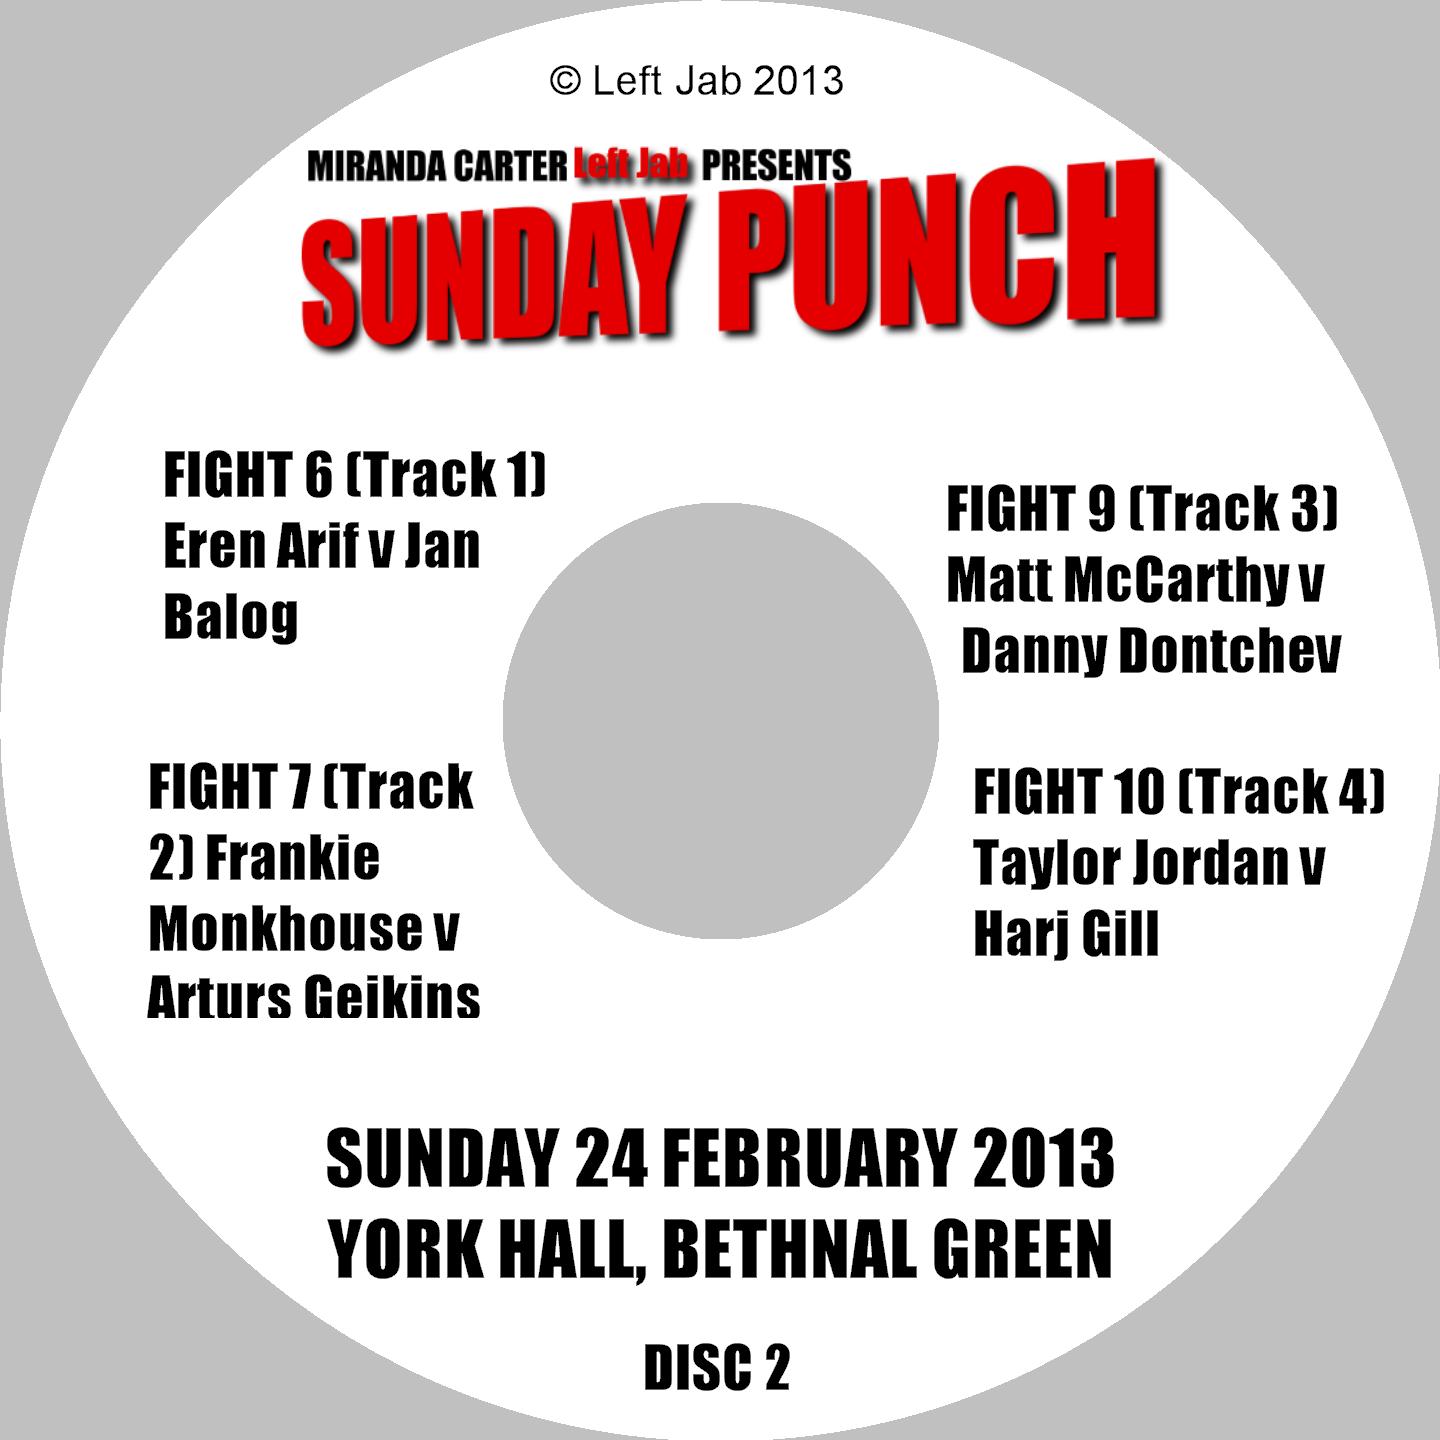 Sunday Punch DVD